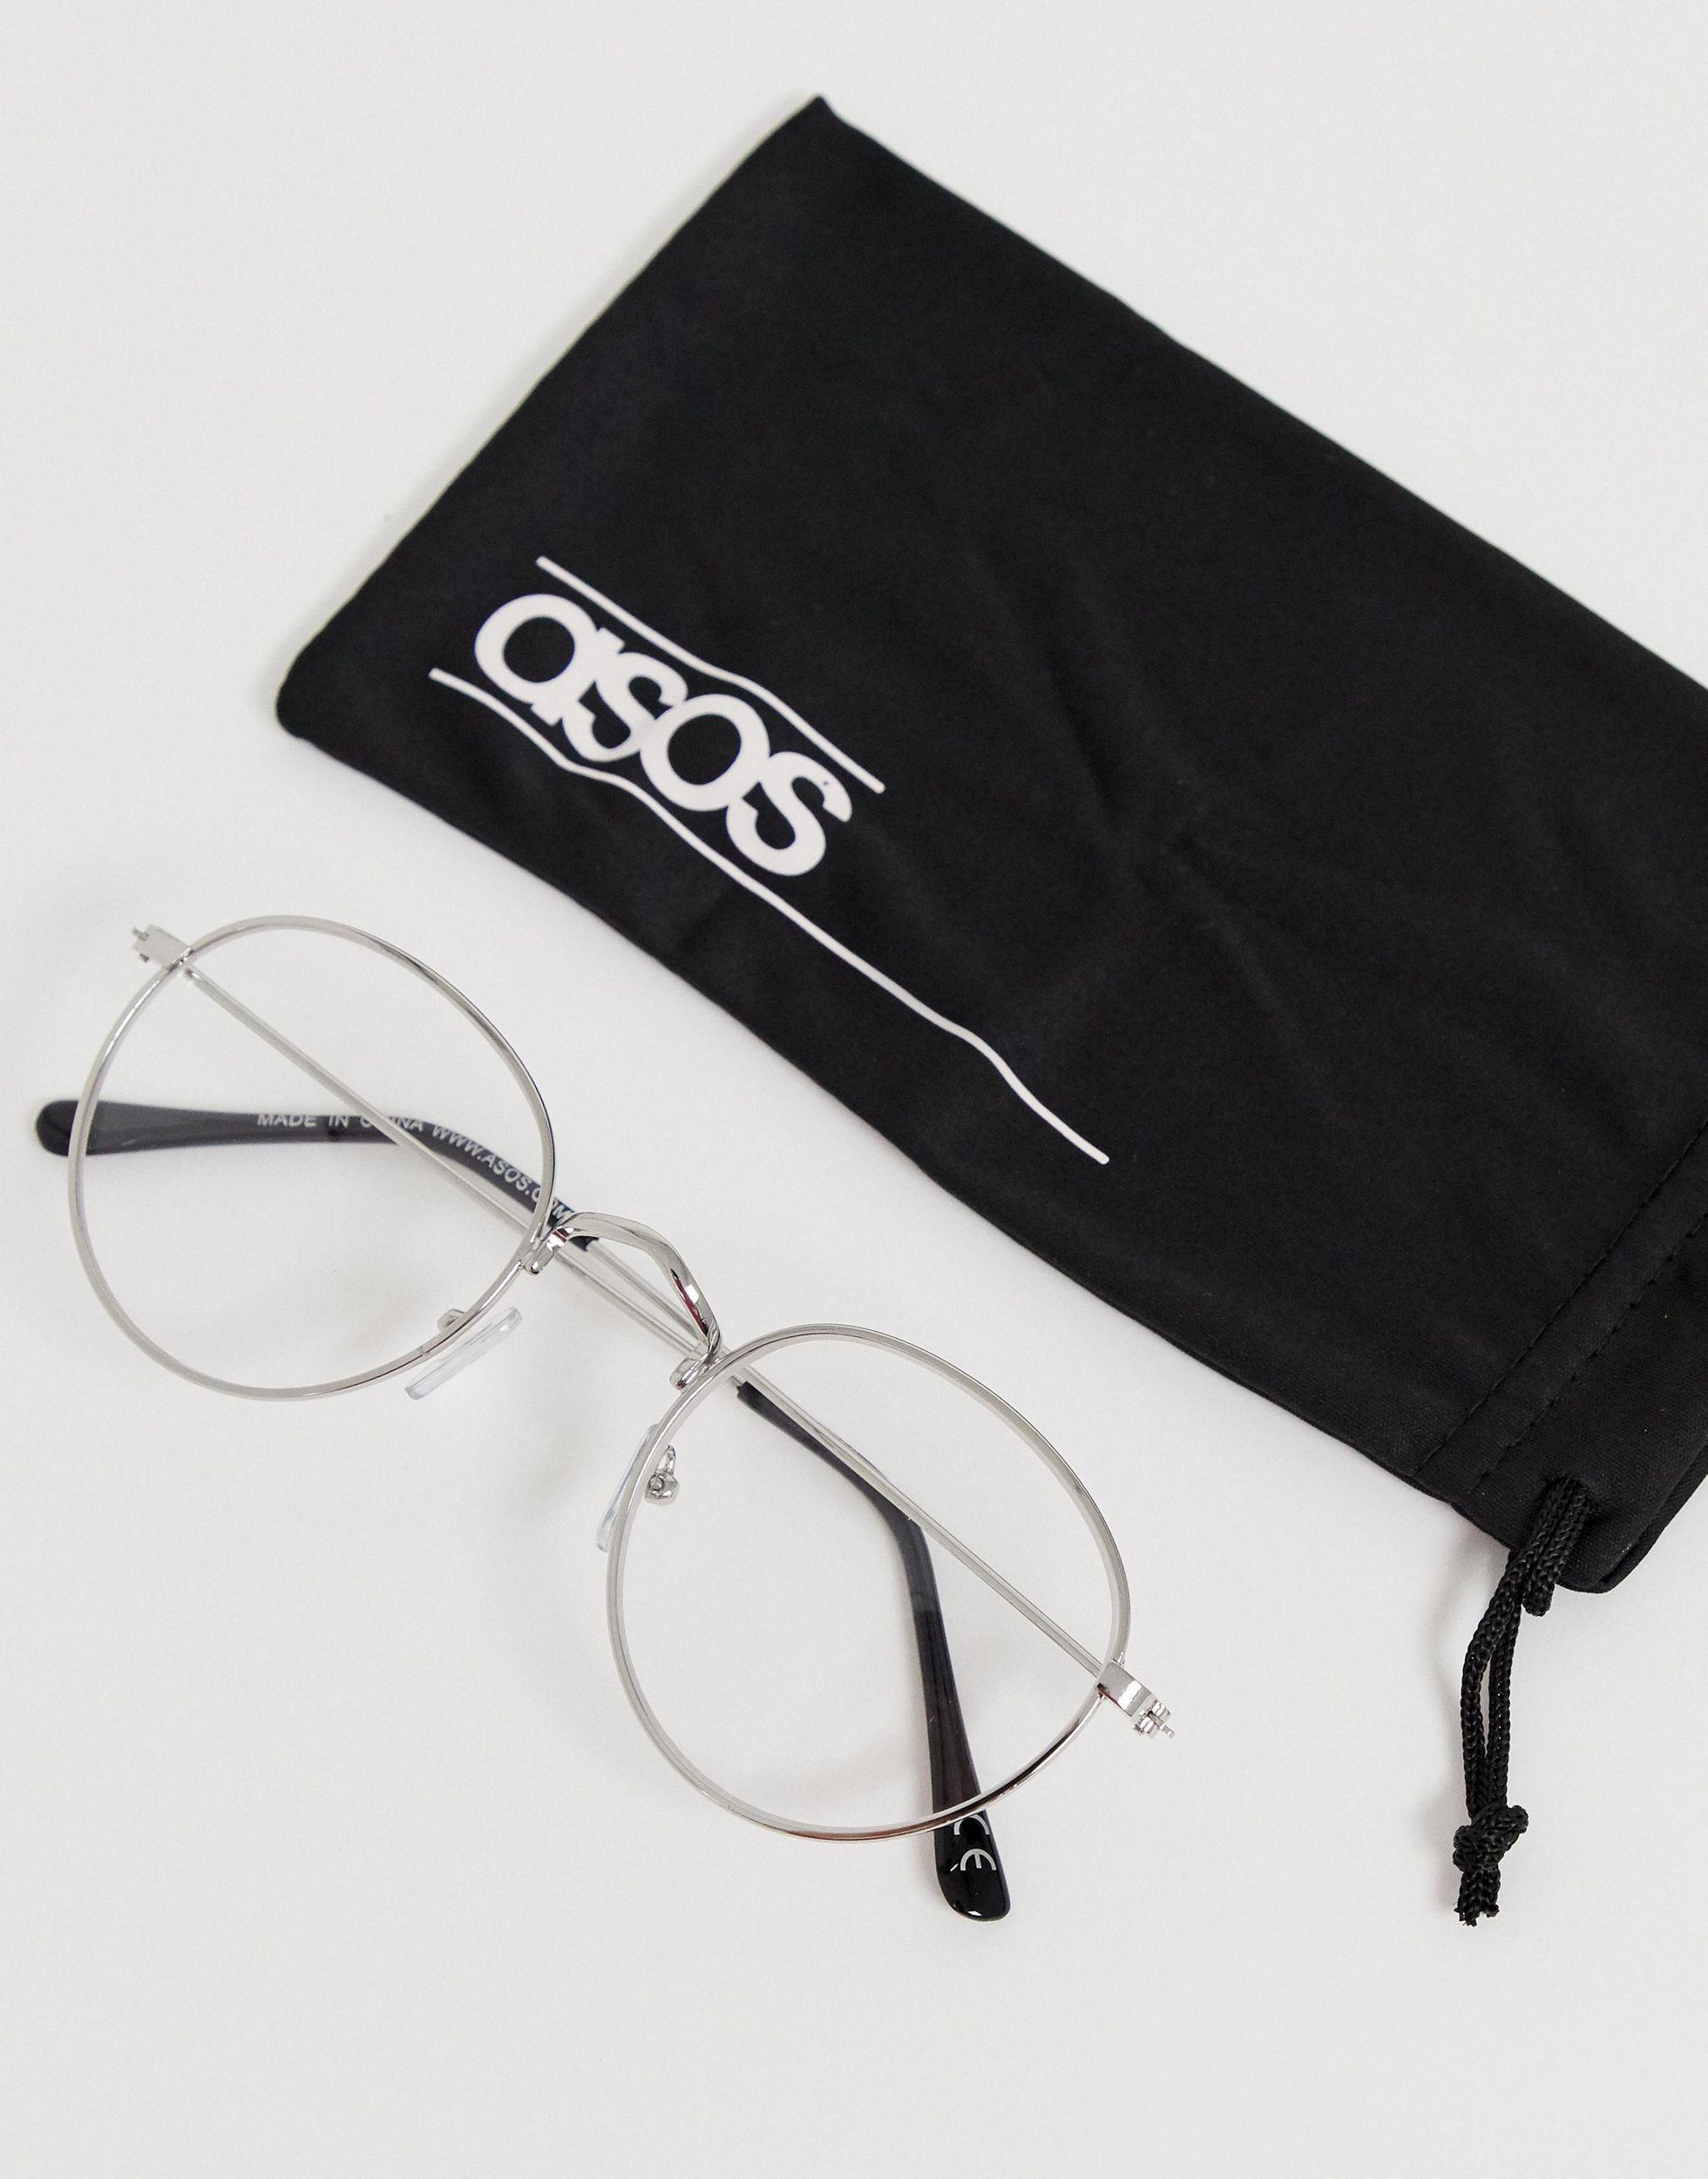 ASOS Round Glasses in Silver (Metallic) for Men - Lyst